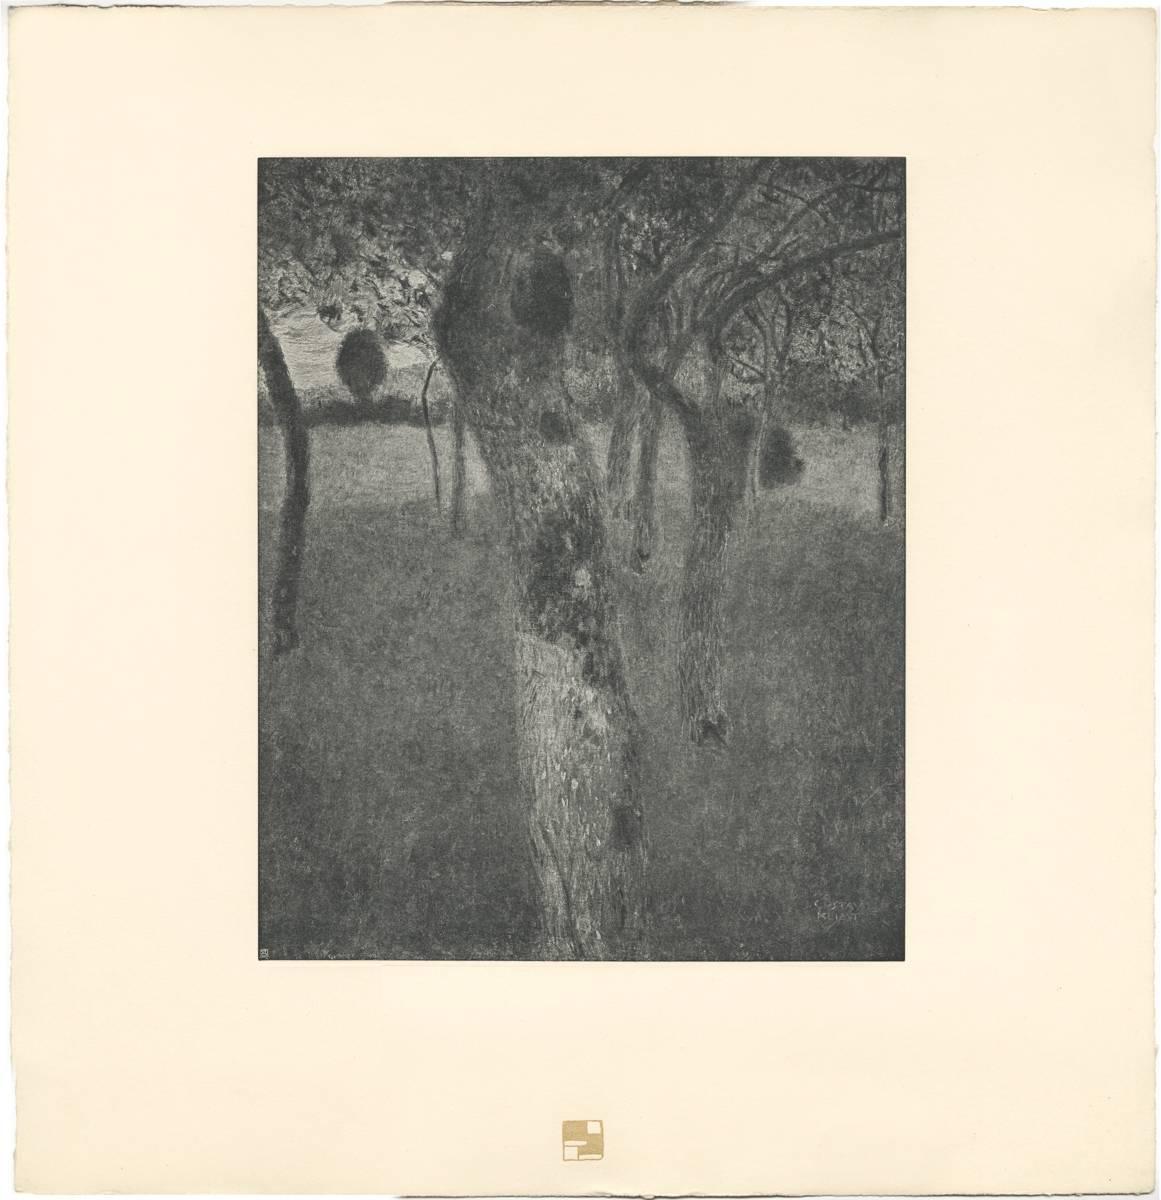 H.O. Miethke Das Werk folio "Orchard in the Evening" collotype print